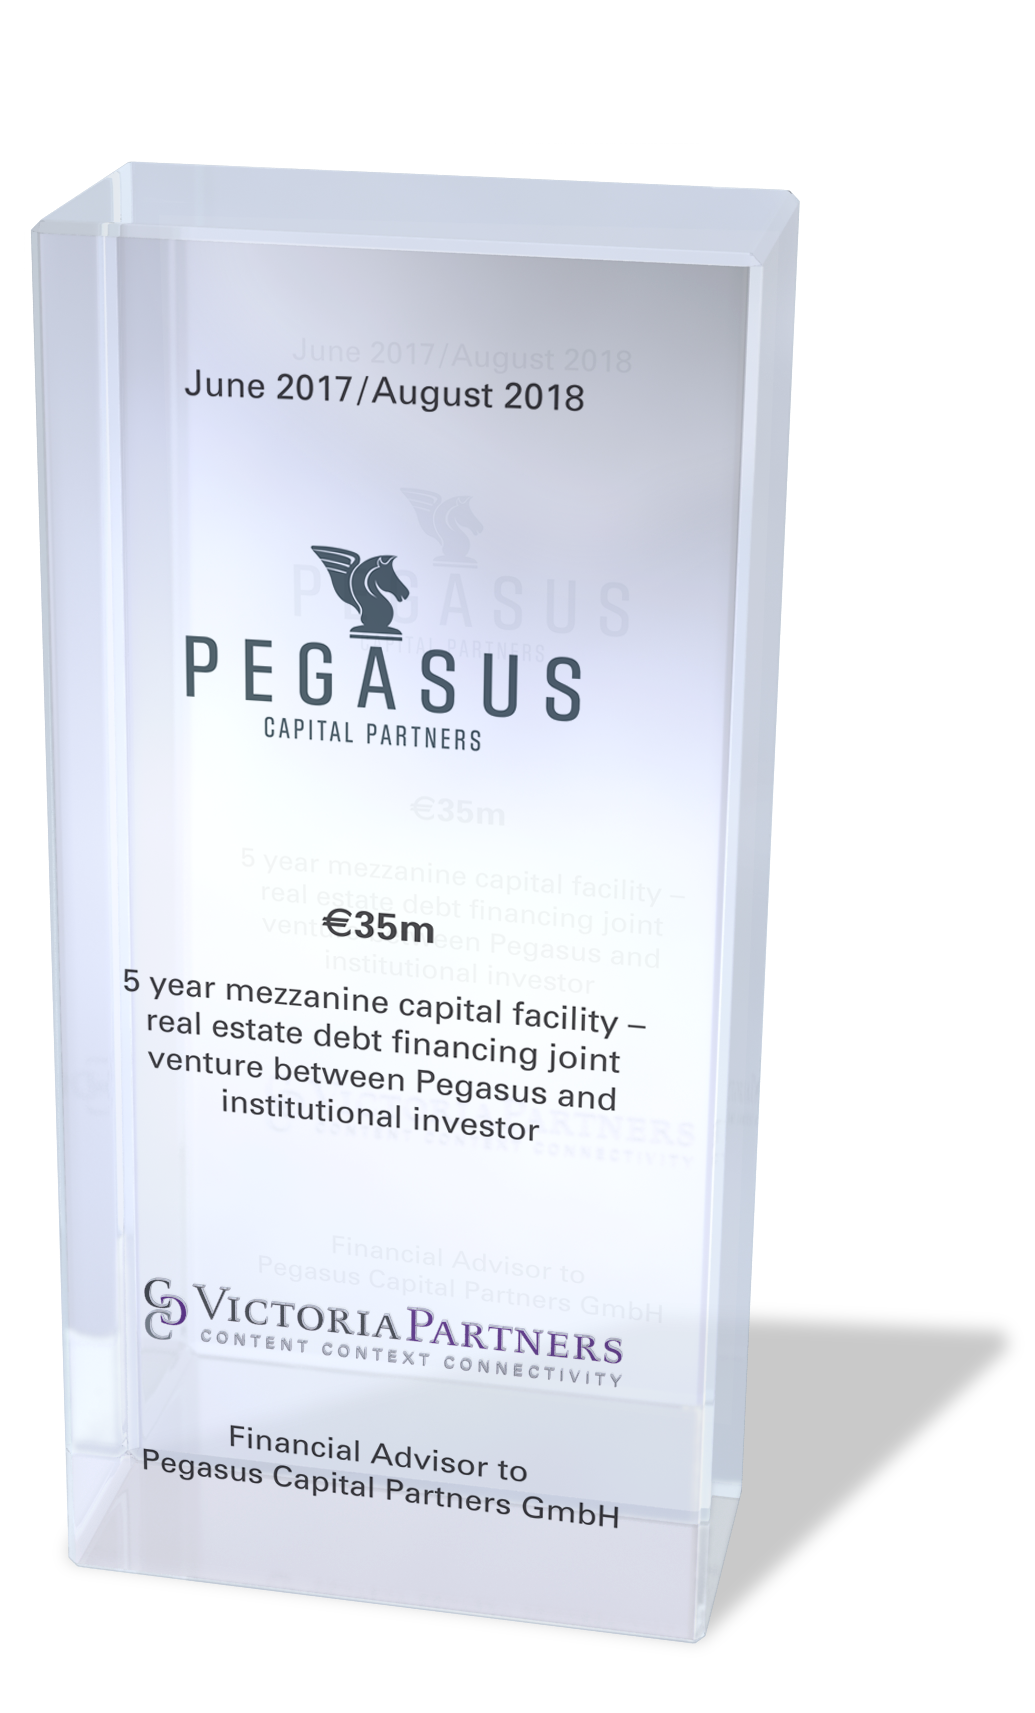 VICTORIAPARTNERS - Financial Advisor to Pegasus Capital Partners GmbH - June 2017/August 2018